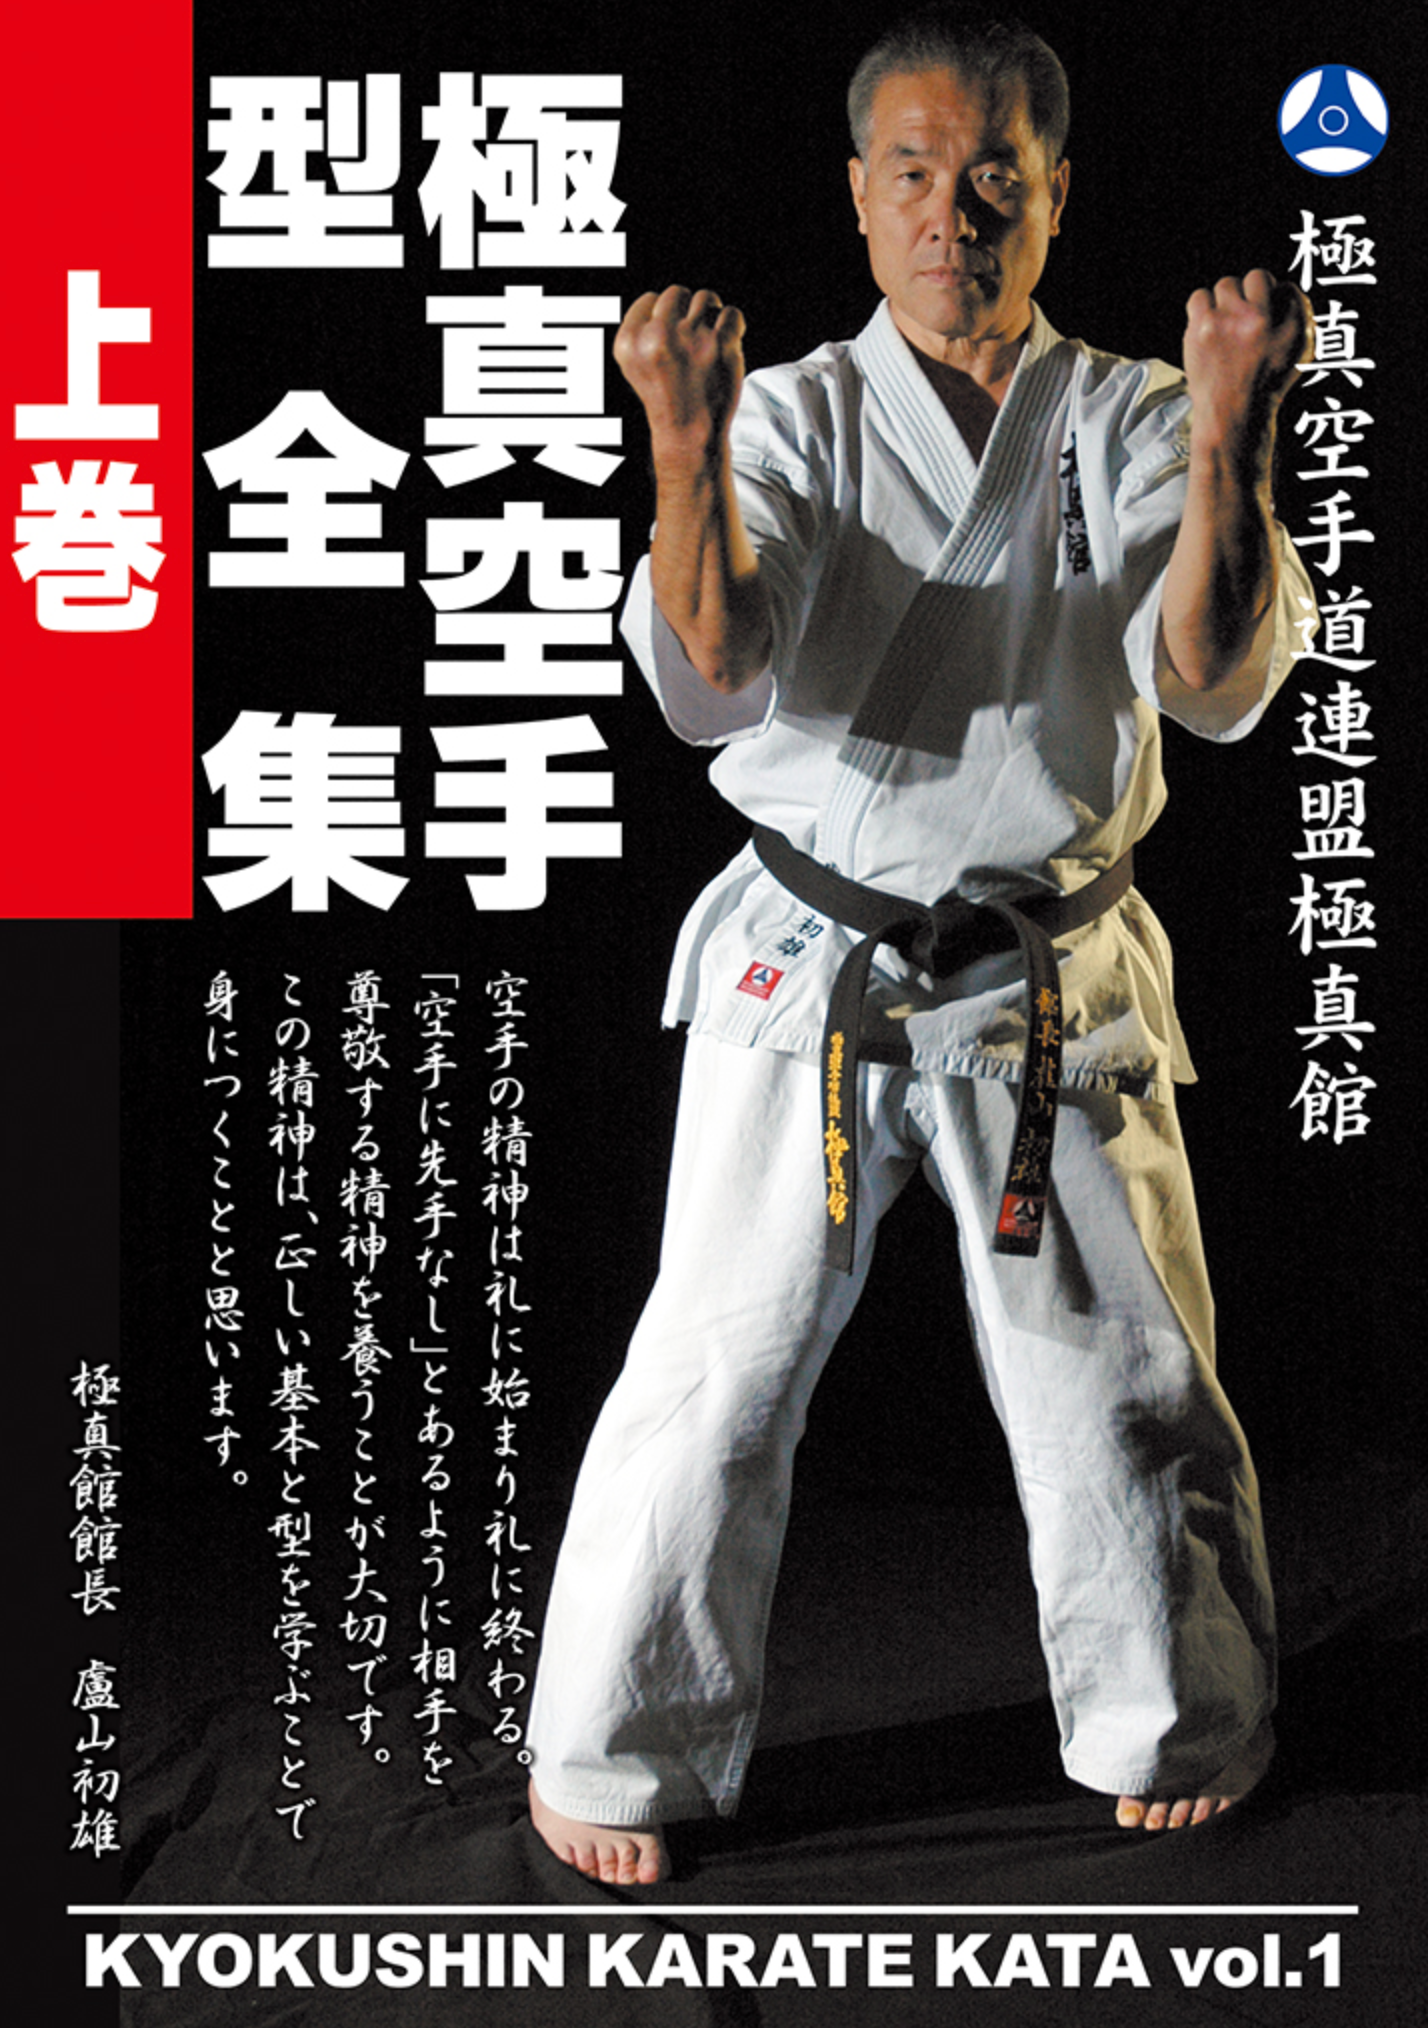 Kyokushin Karate Kata Vol 1 DVD by Hiroto Okazaki - Budovideos Inc